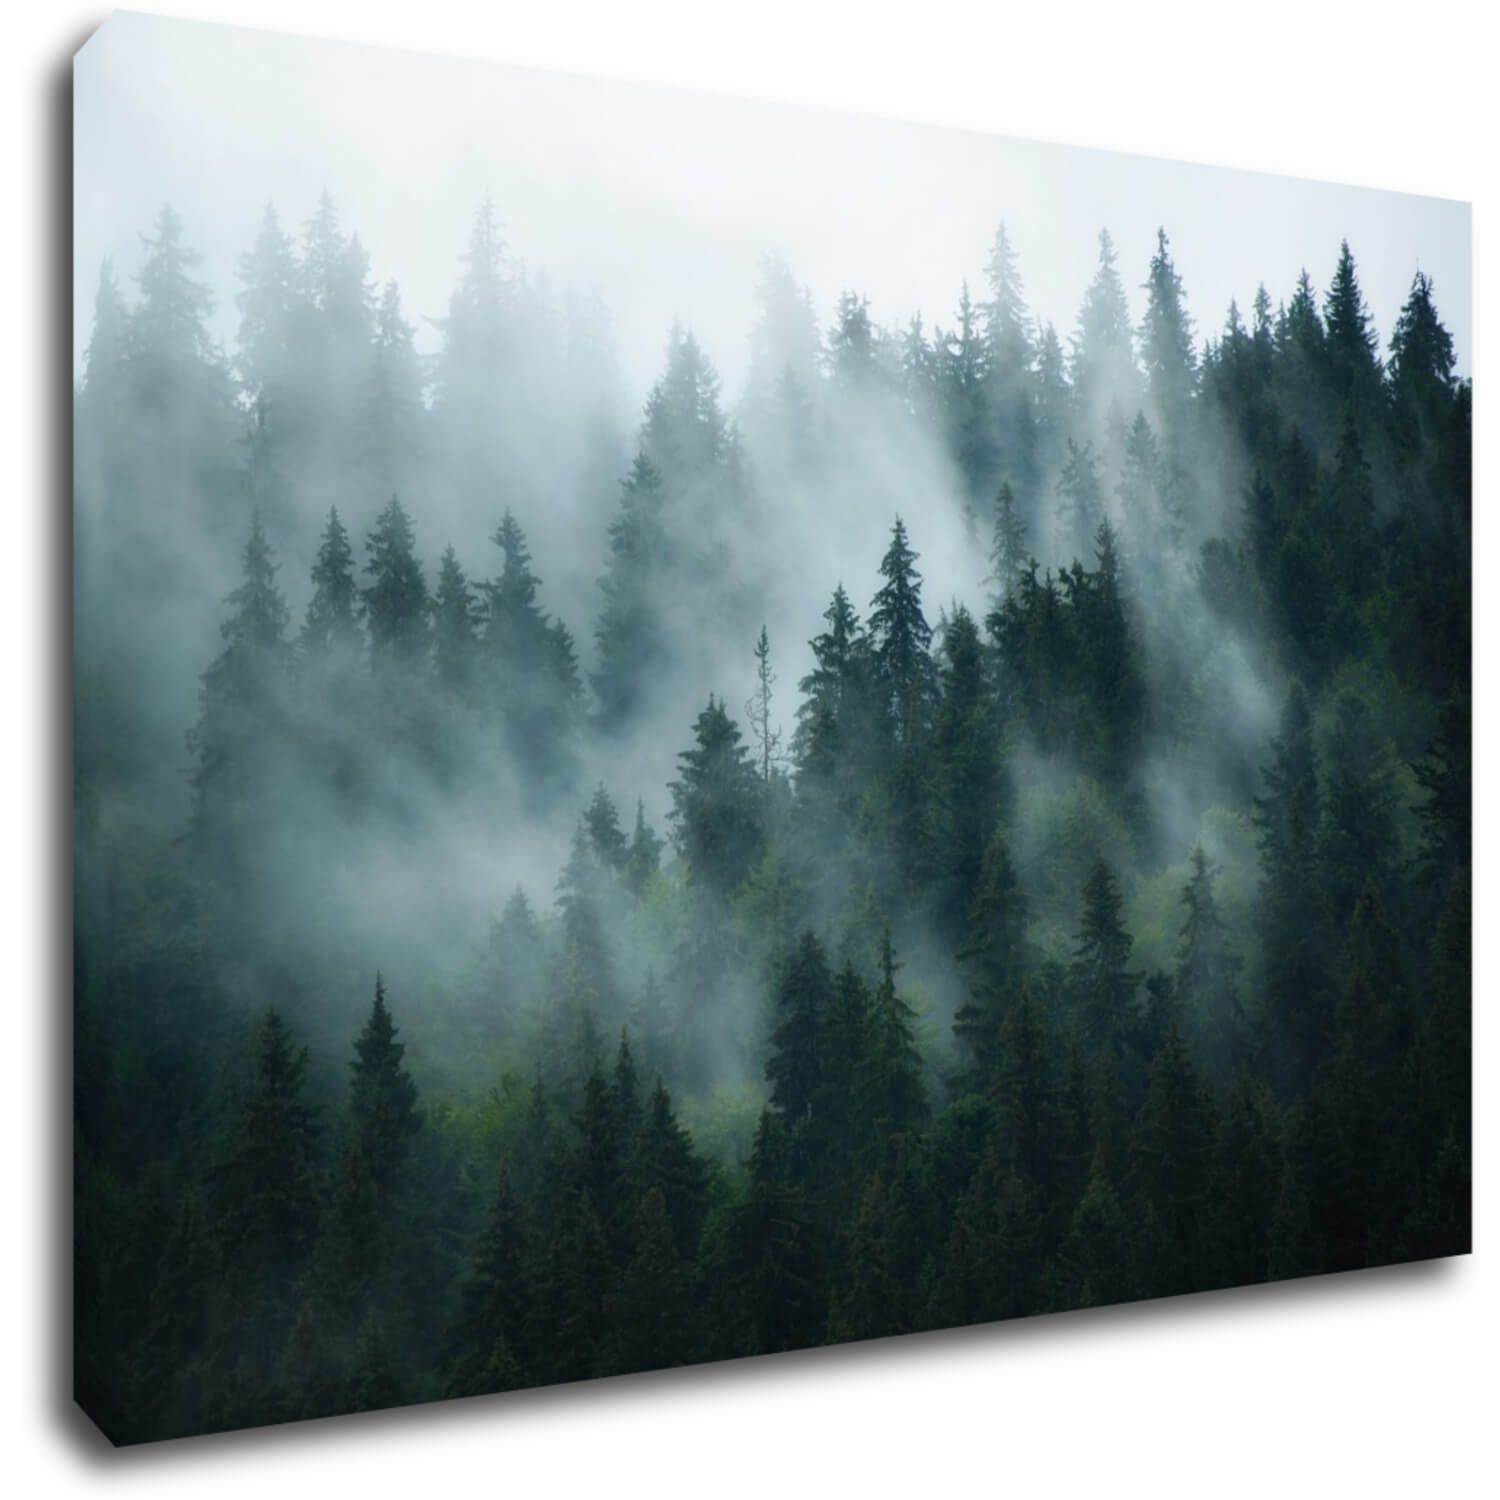 Obraz Les v hmle - 60 x 40 cm